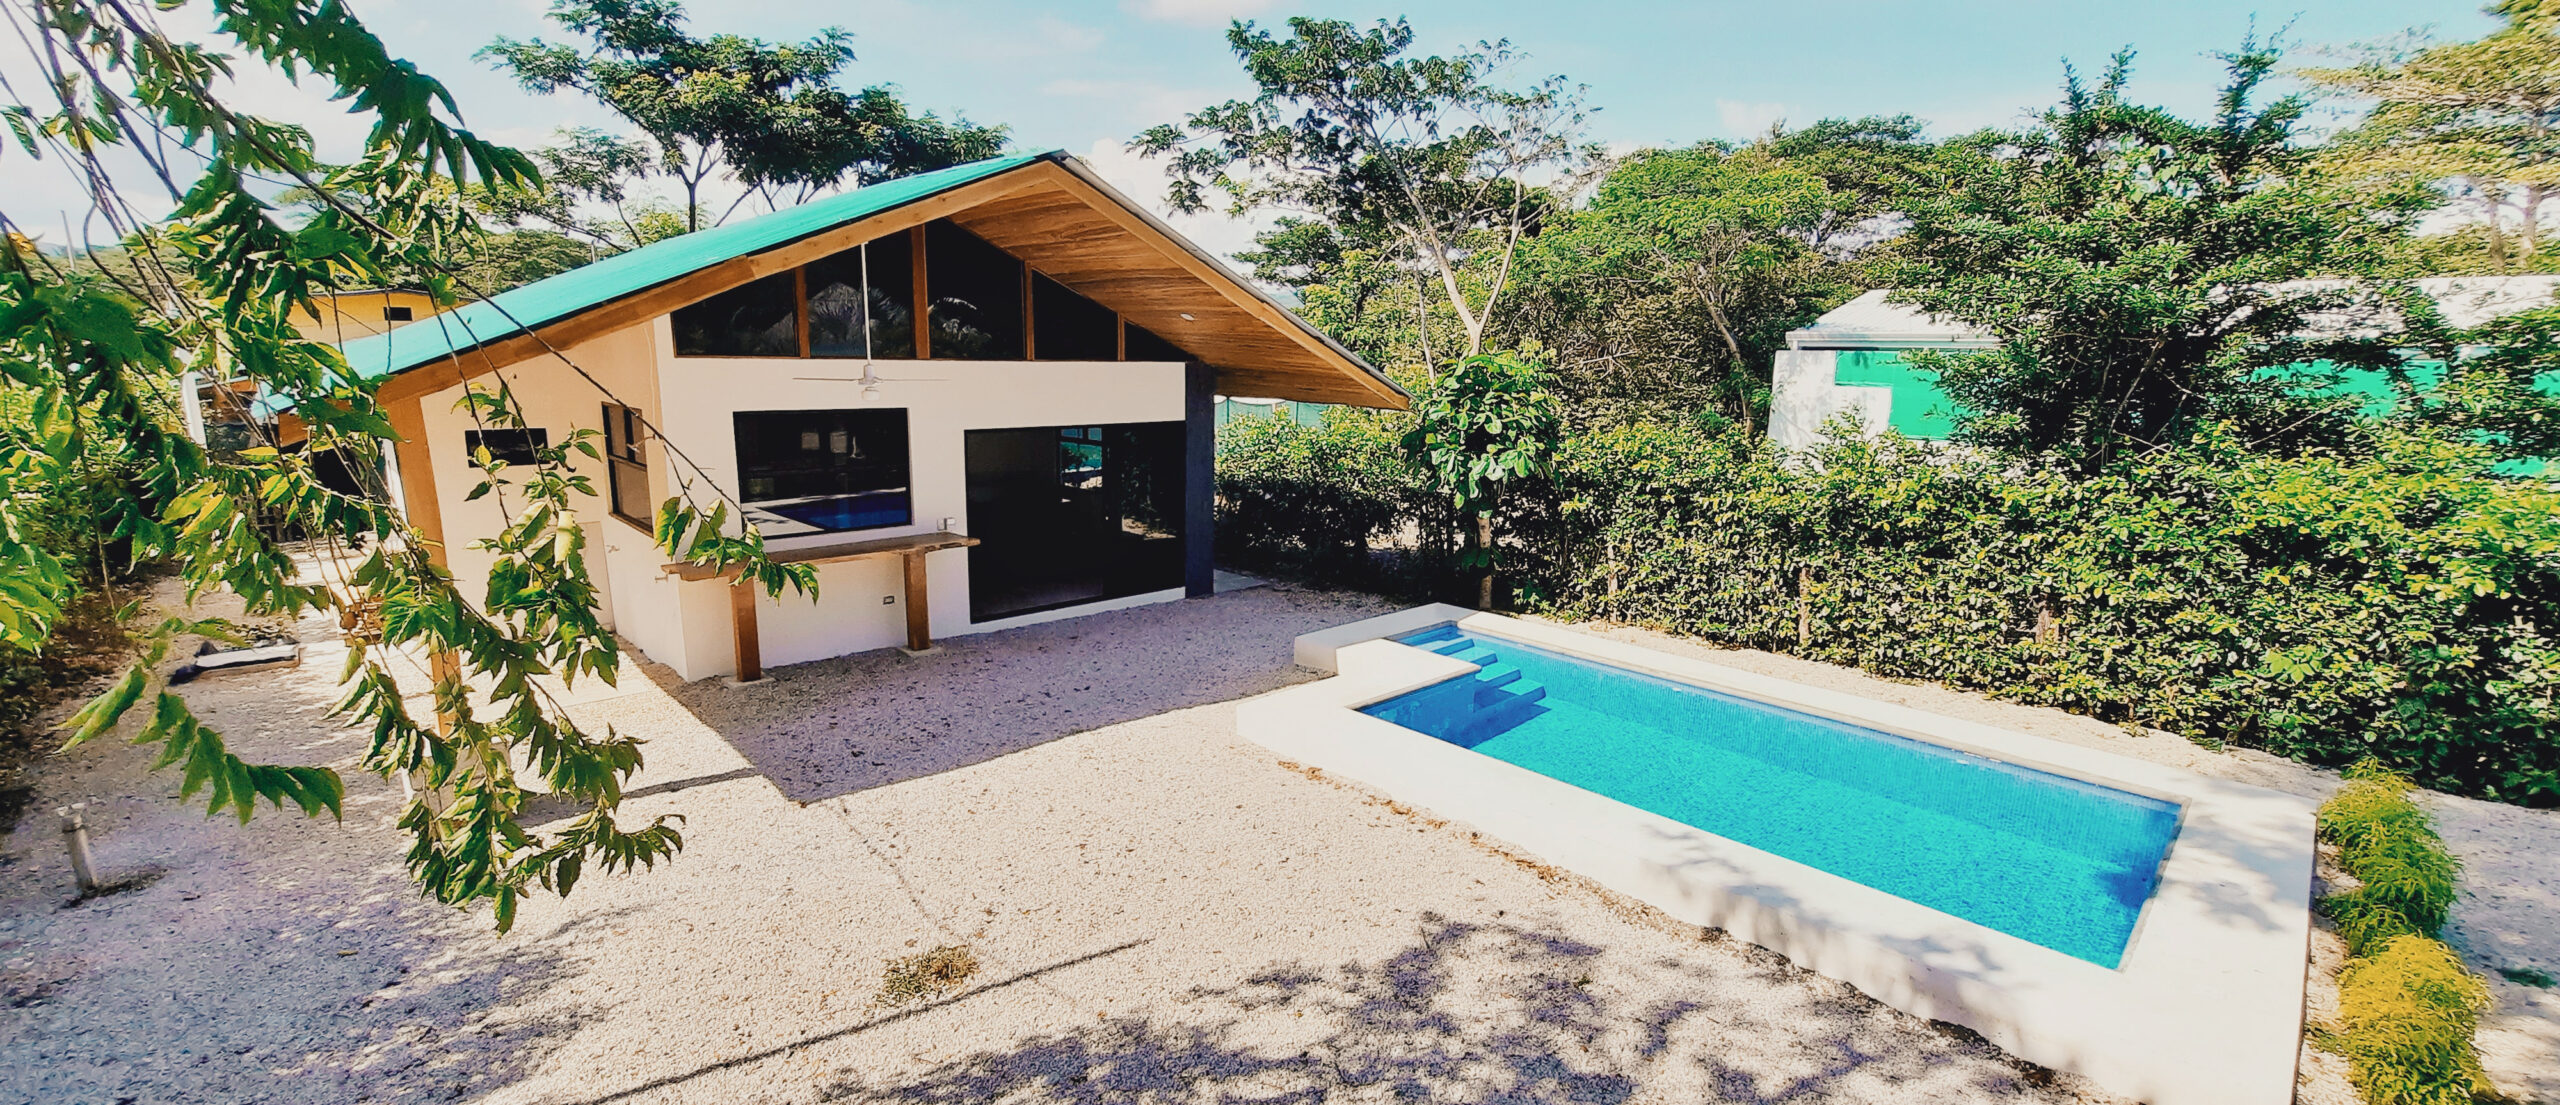 Casa Buena Vista – New home with great location